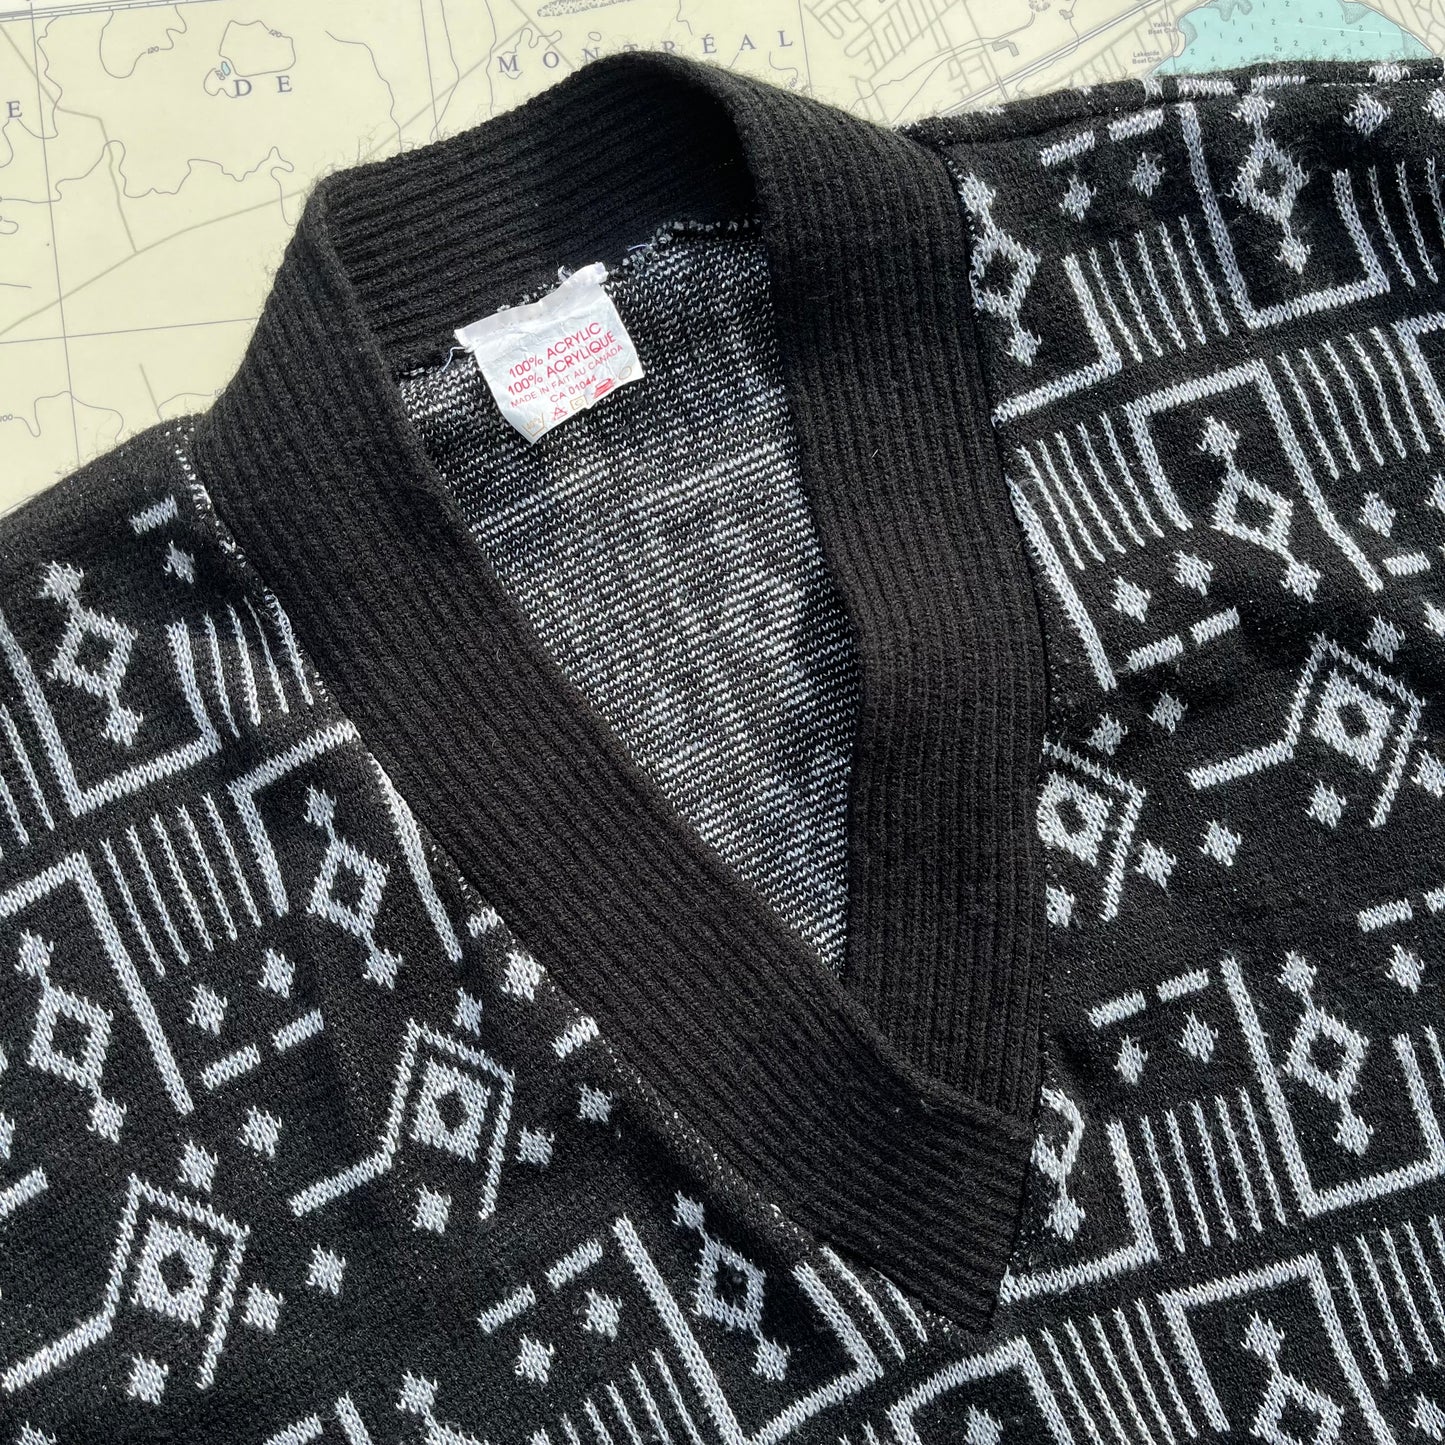 Vintage 80s Geometric Metallic Knit Sweater